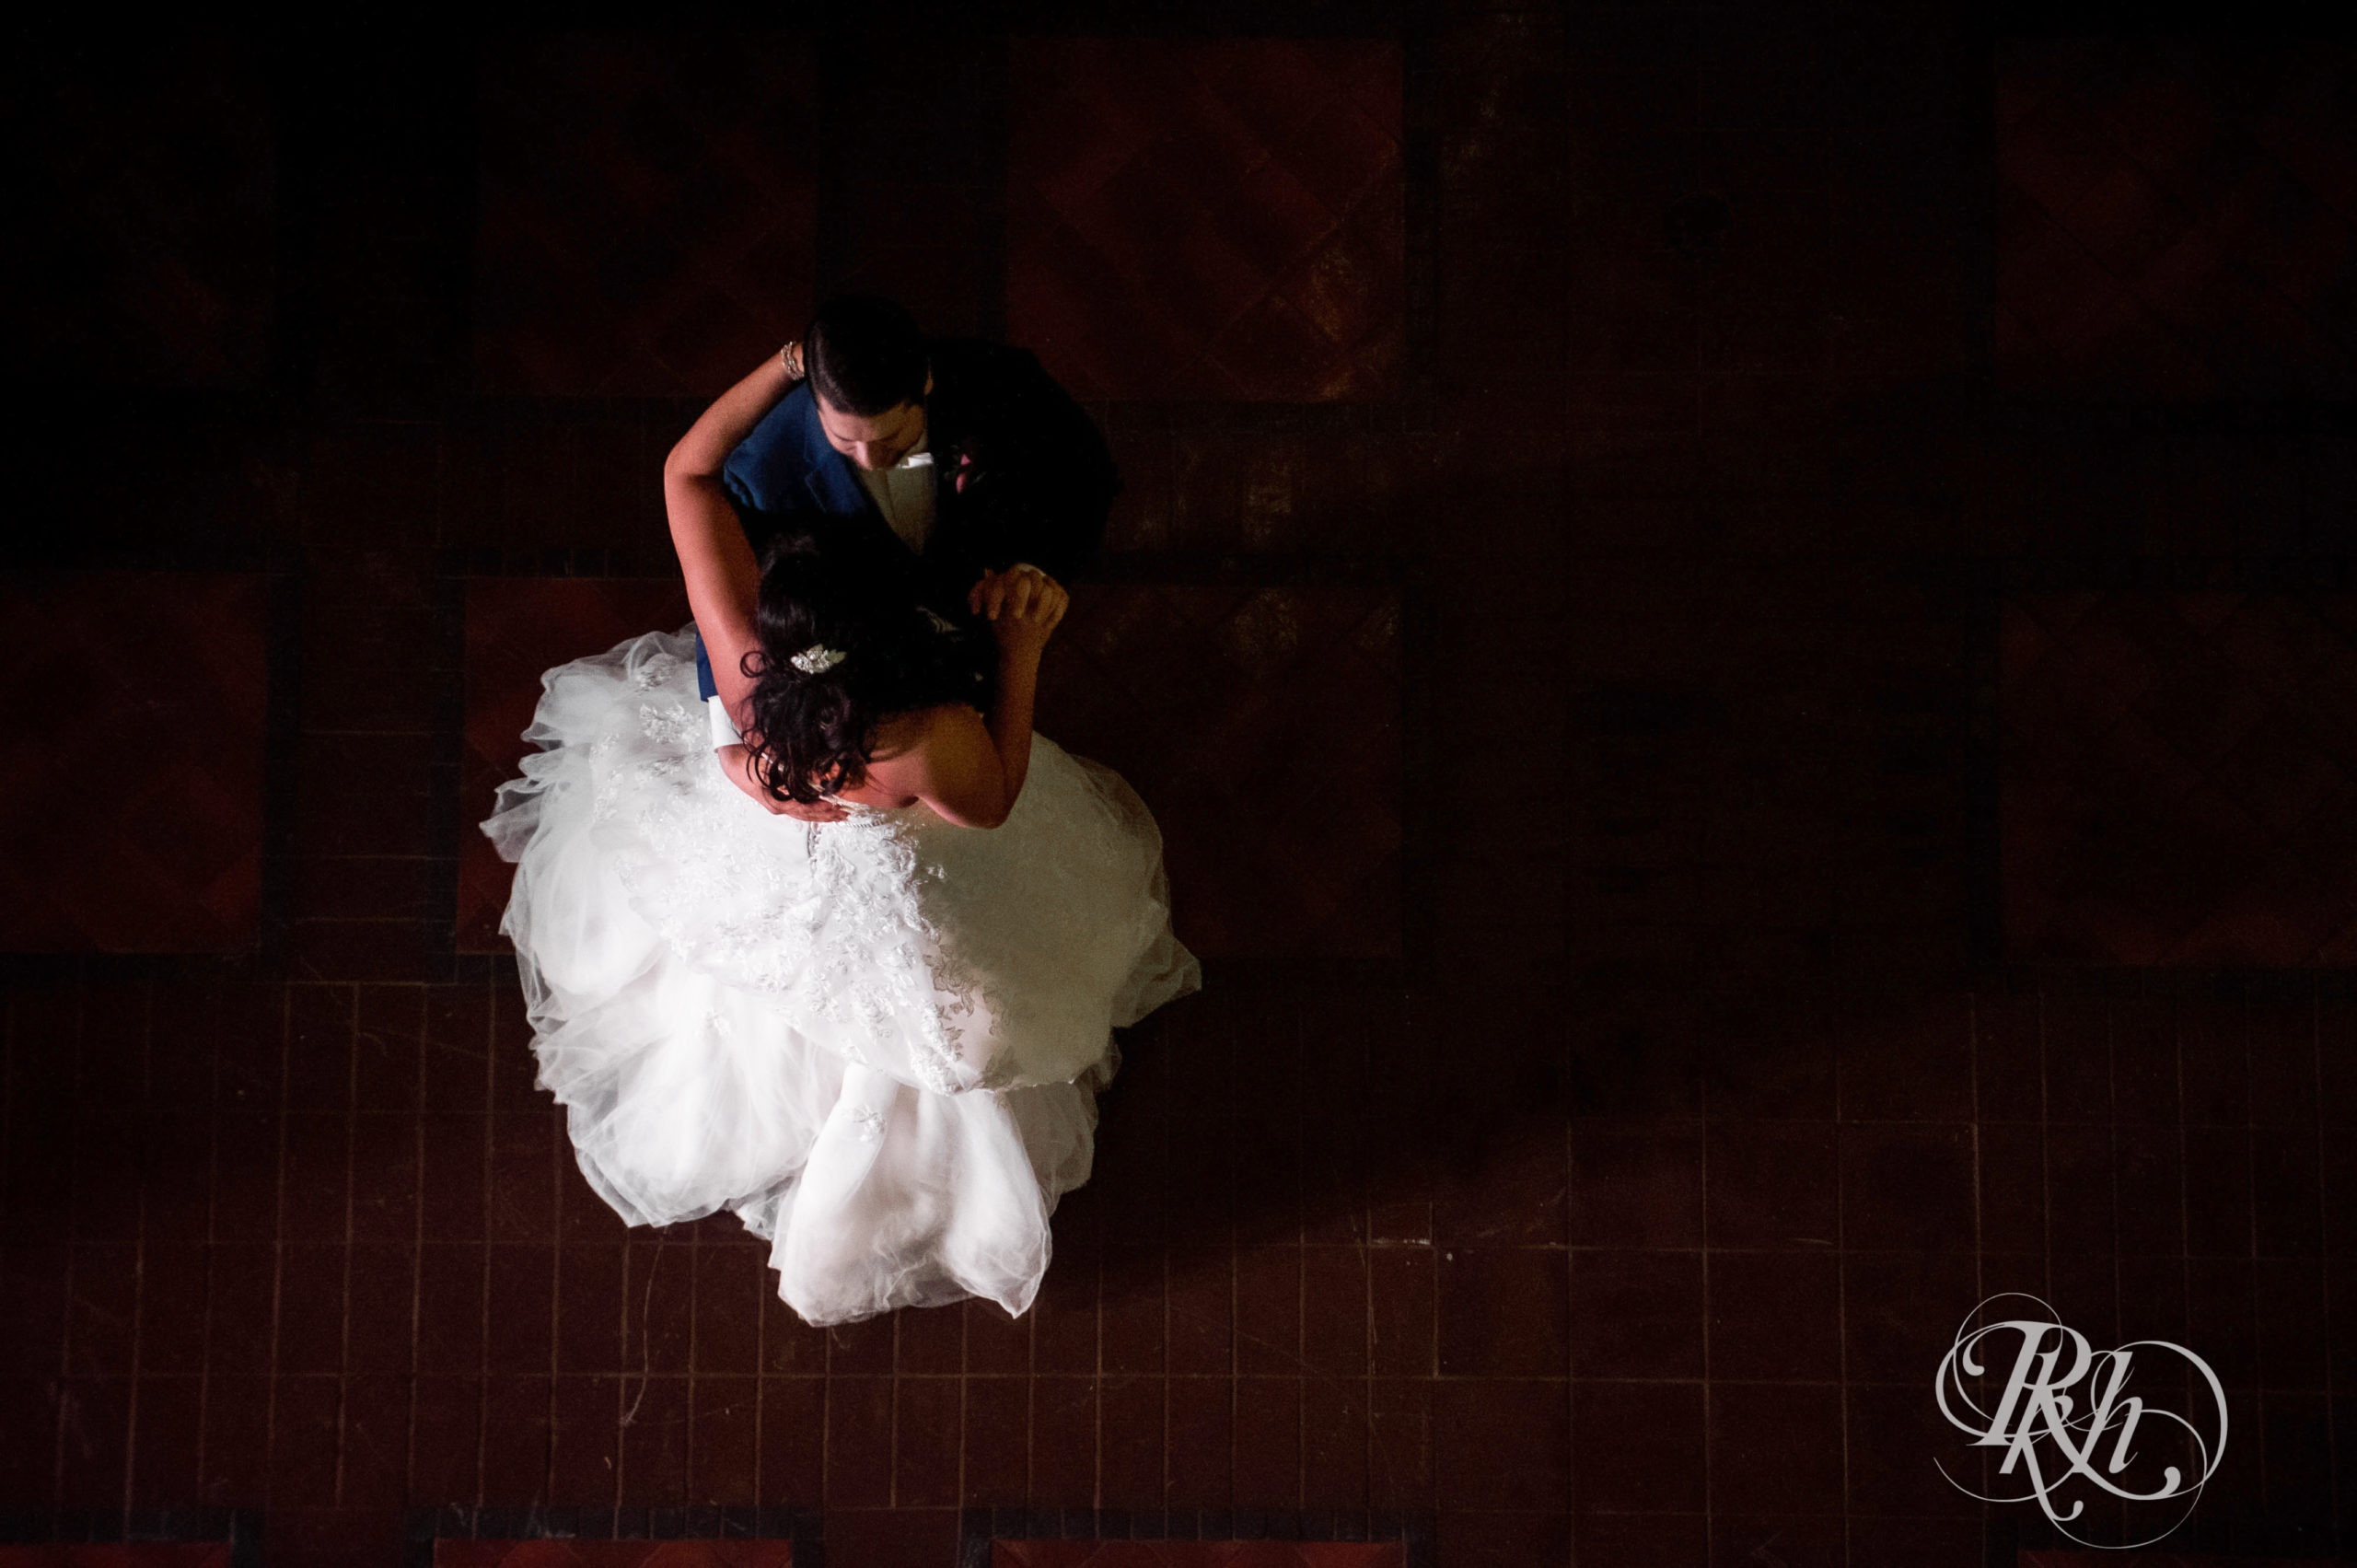 Bride and groom share first dance on wedding day at Landmark Center in Saint Paul, Minnesota.